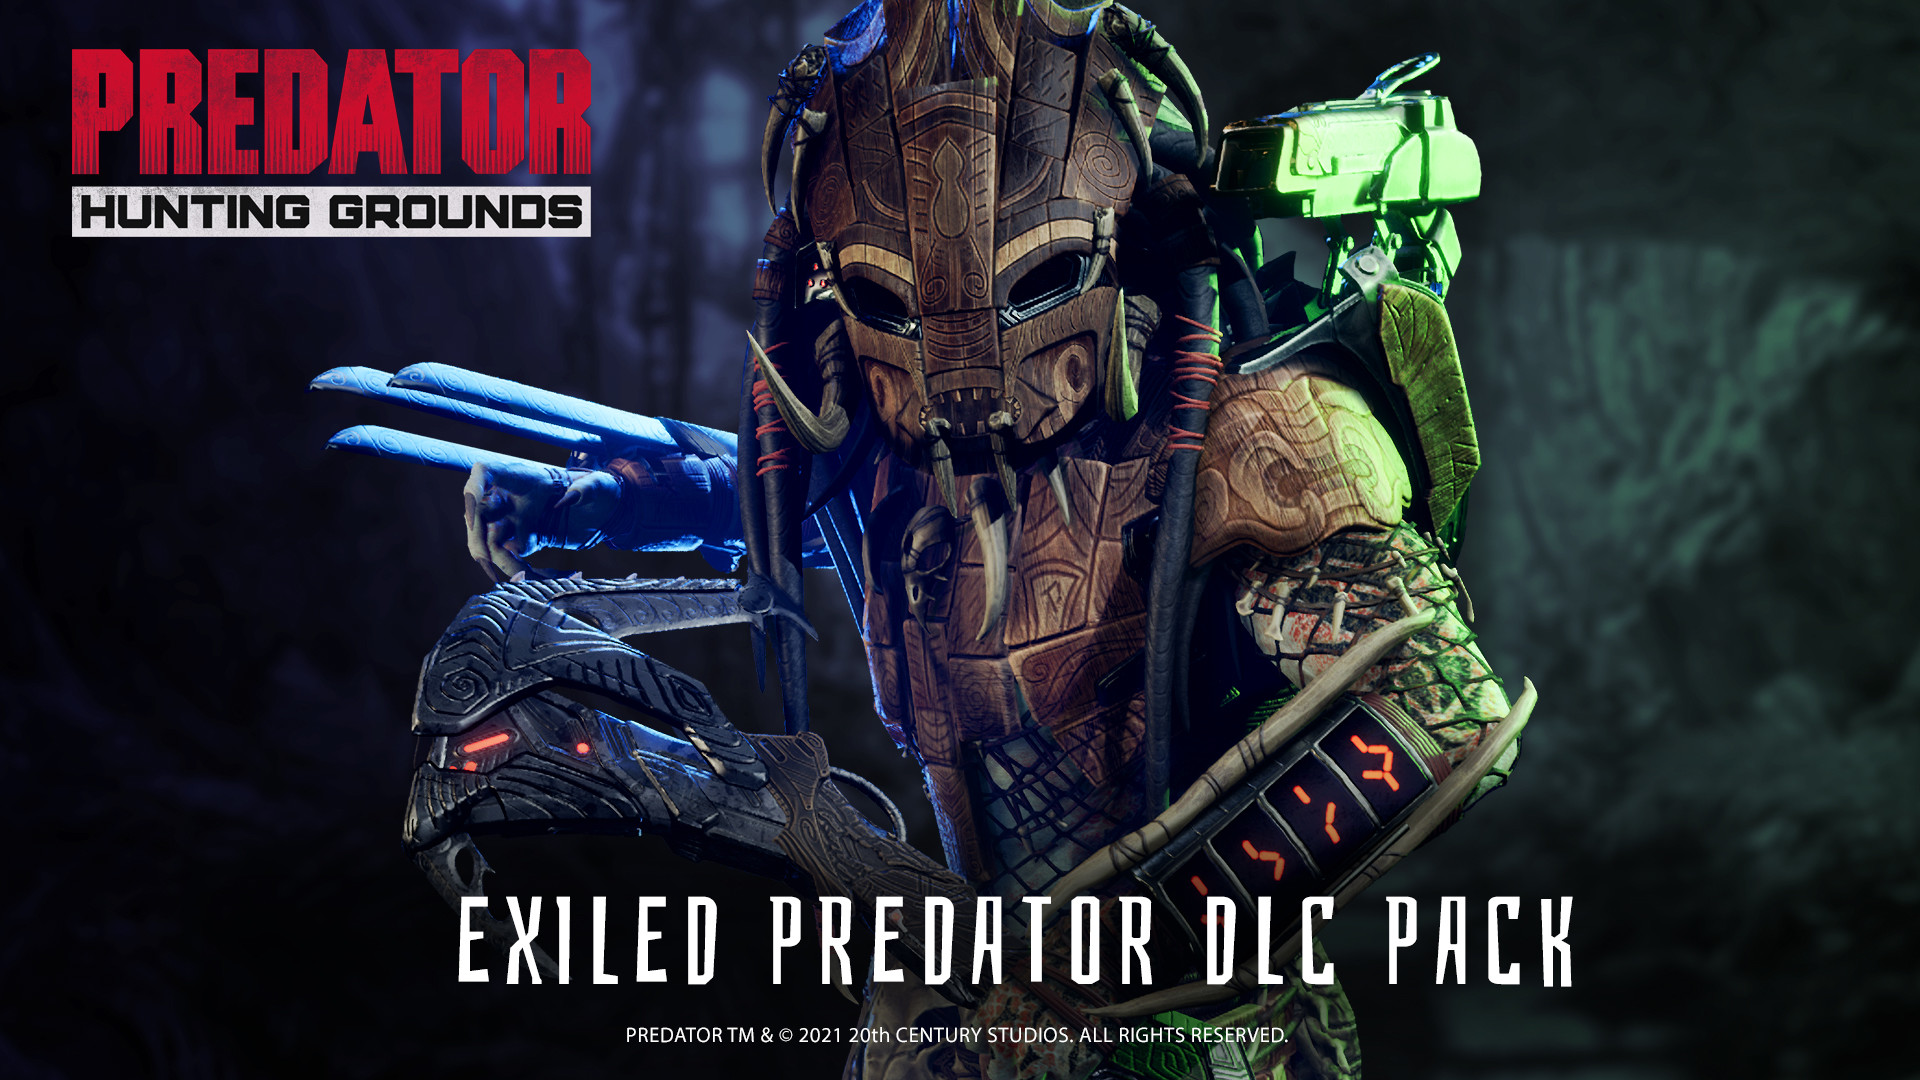 Predator: Hunting Grounds - Exiled Predator DLC Pack Featured Screenshot #1